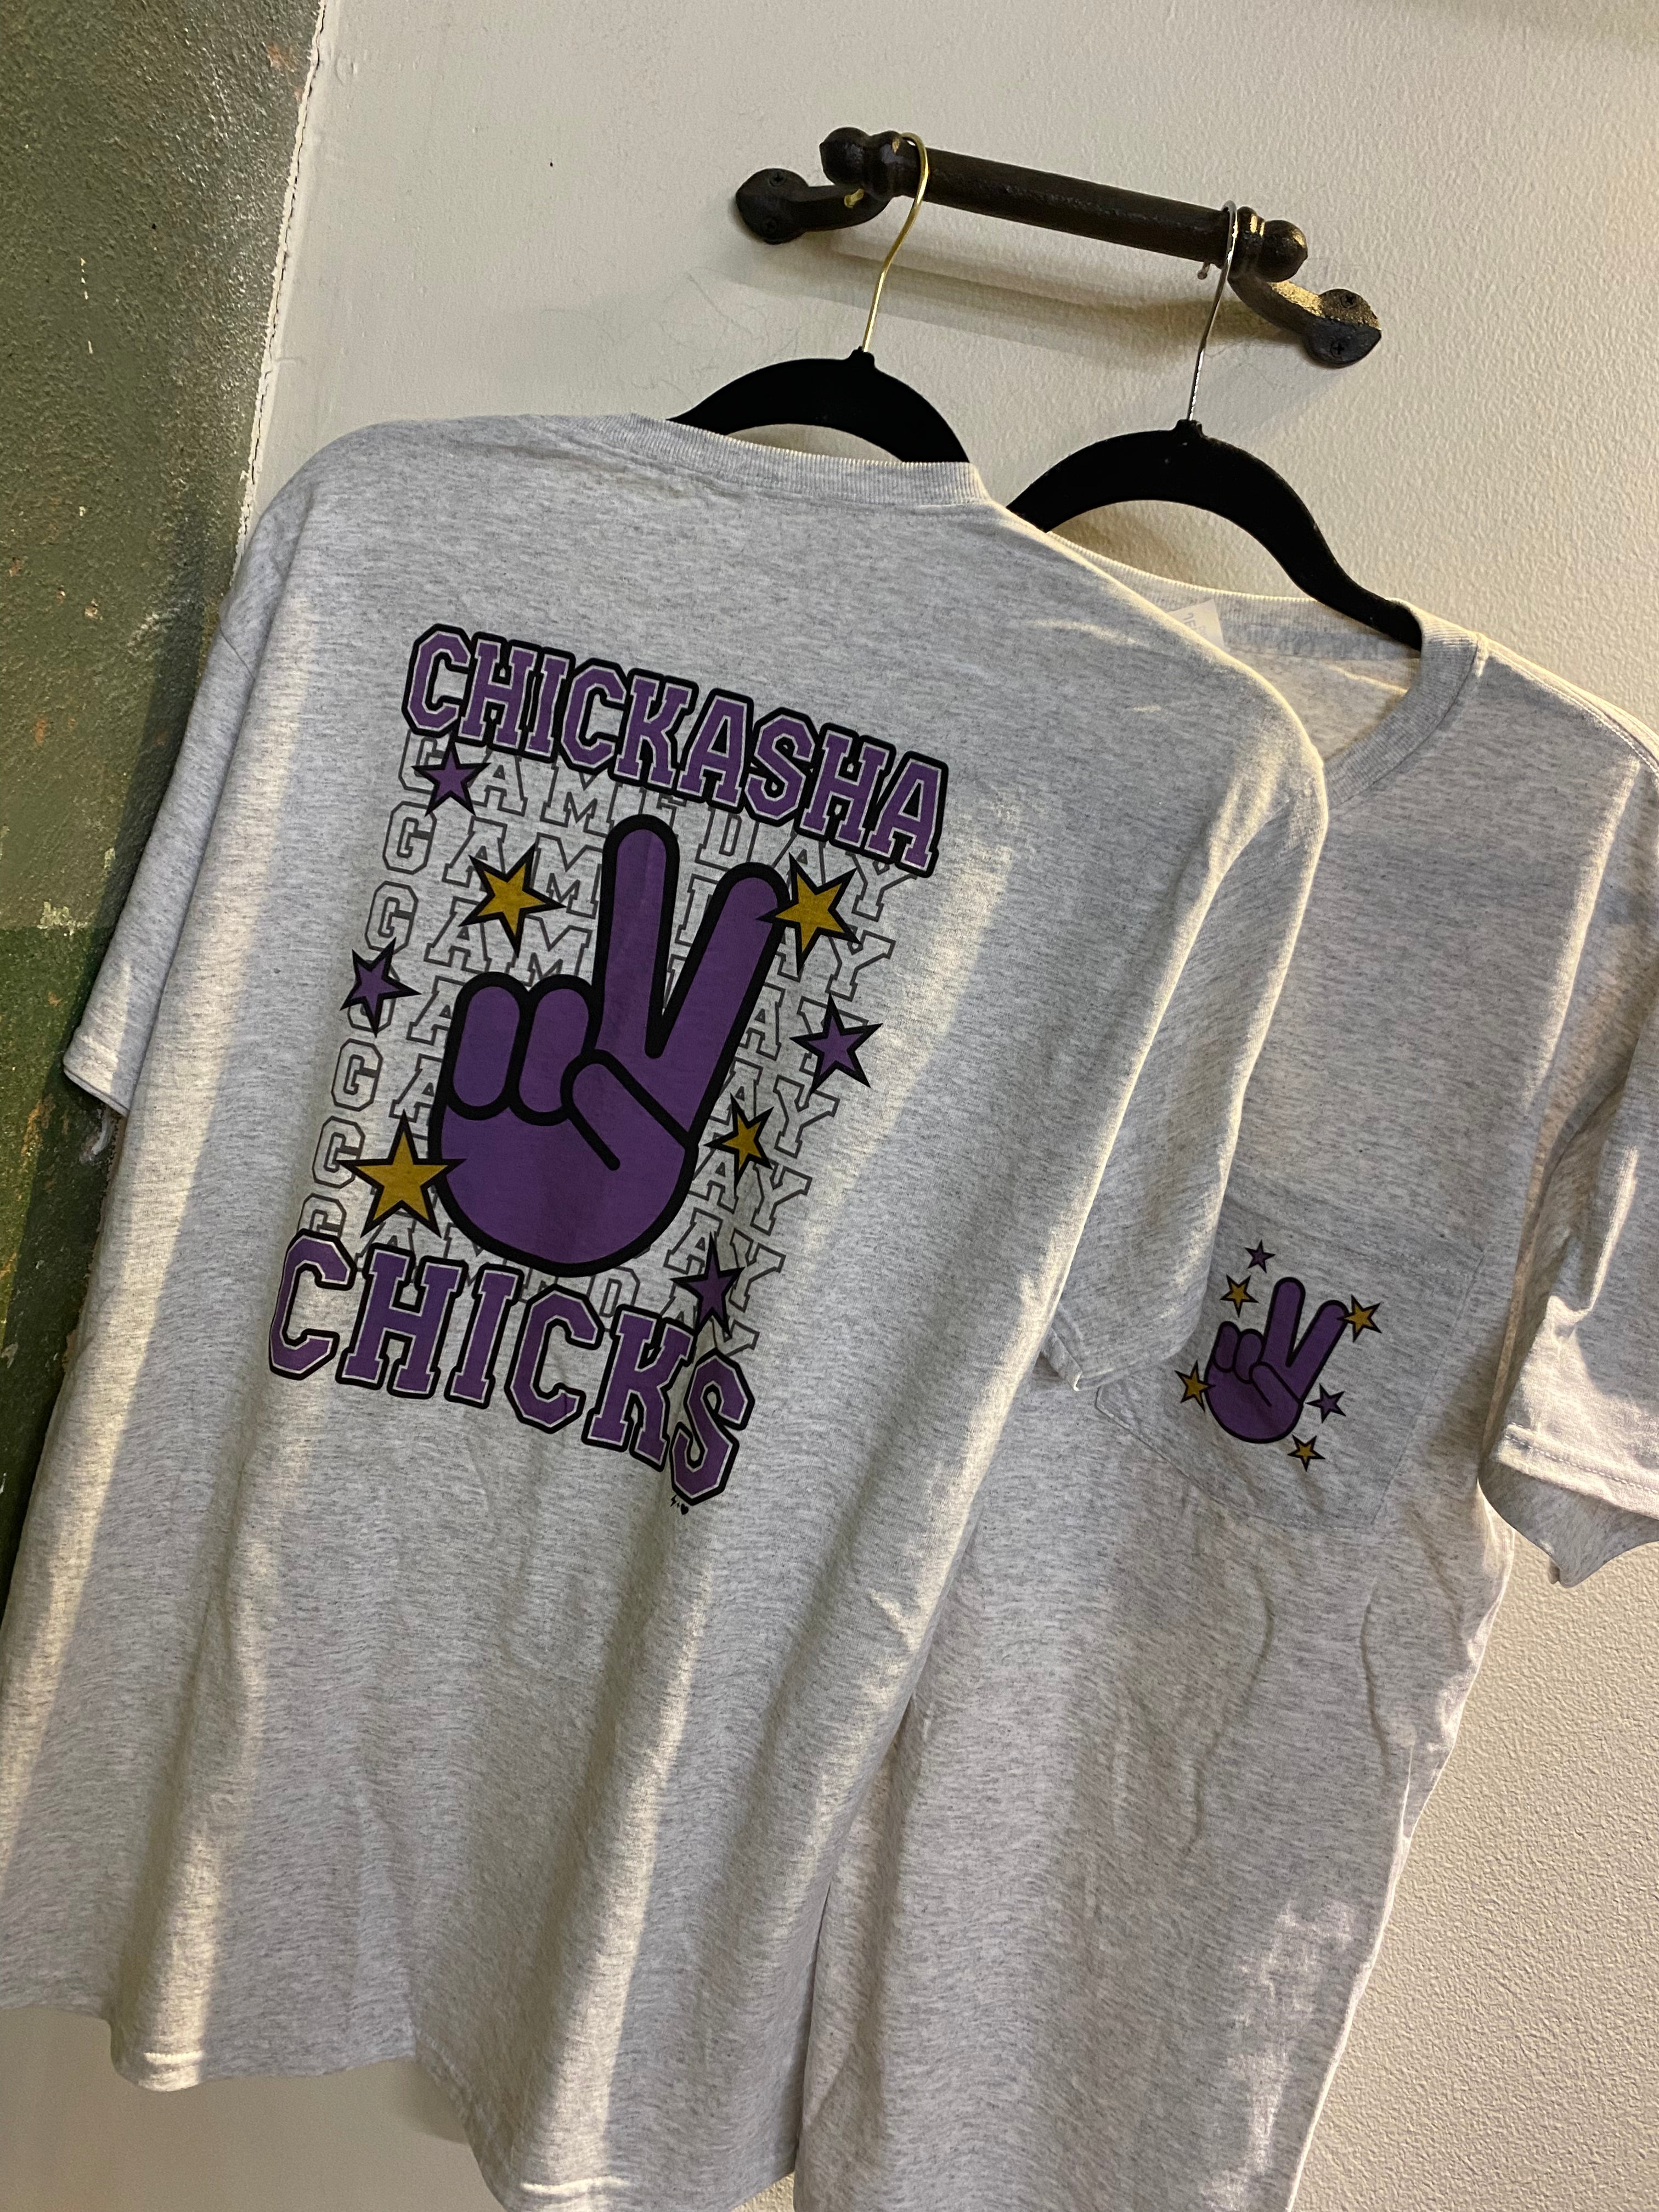 Chickasha Chicks Peace Sign Spirit Tee (Pocket and Back Design)